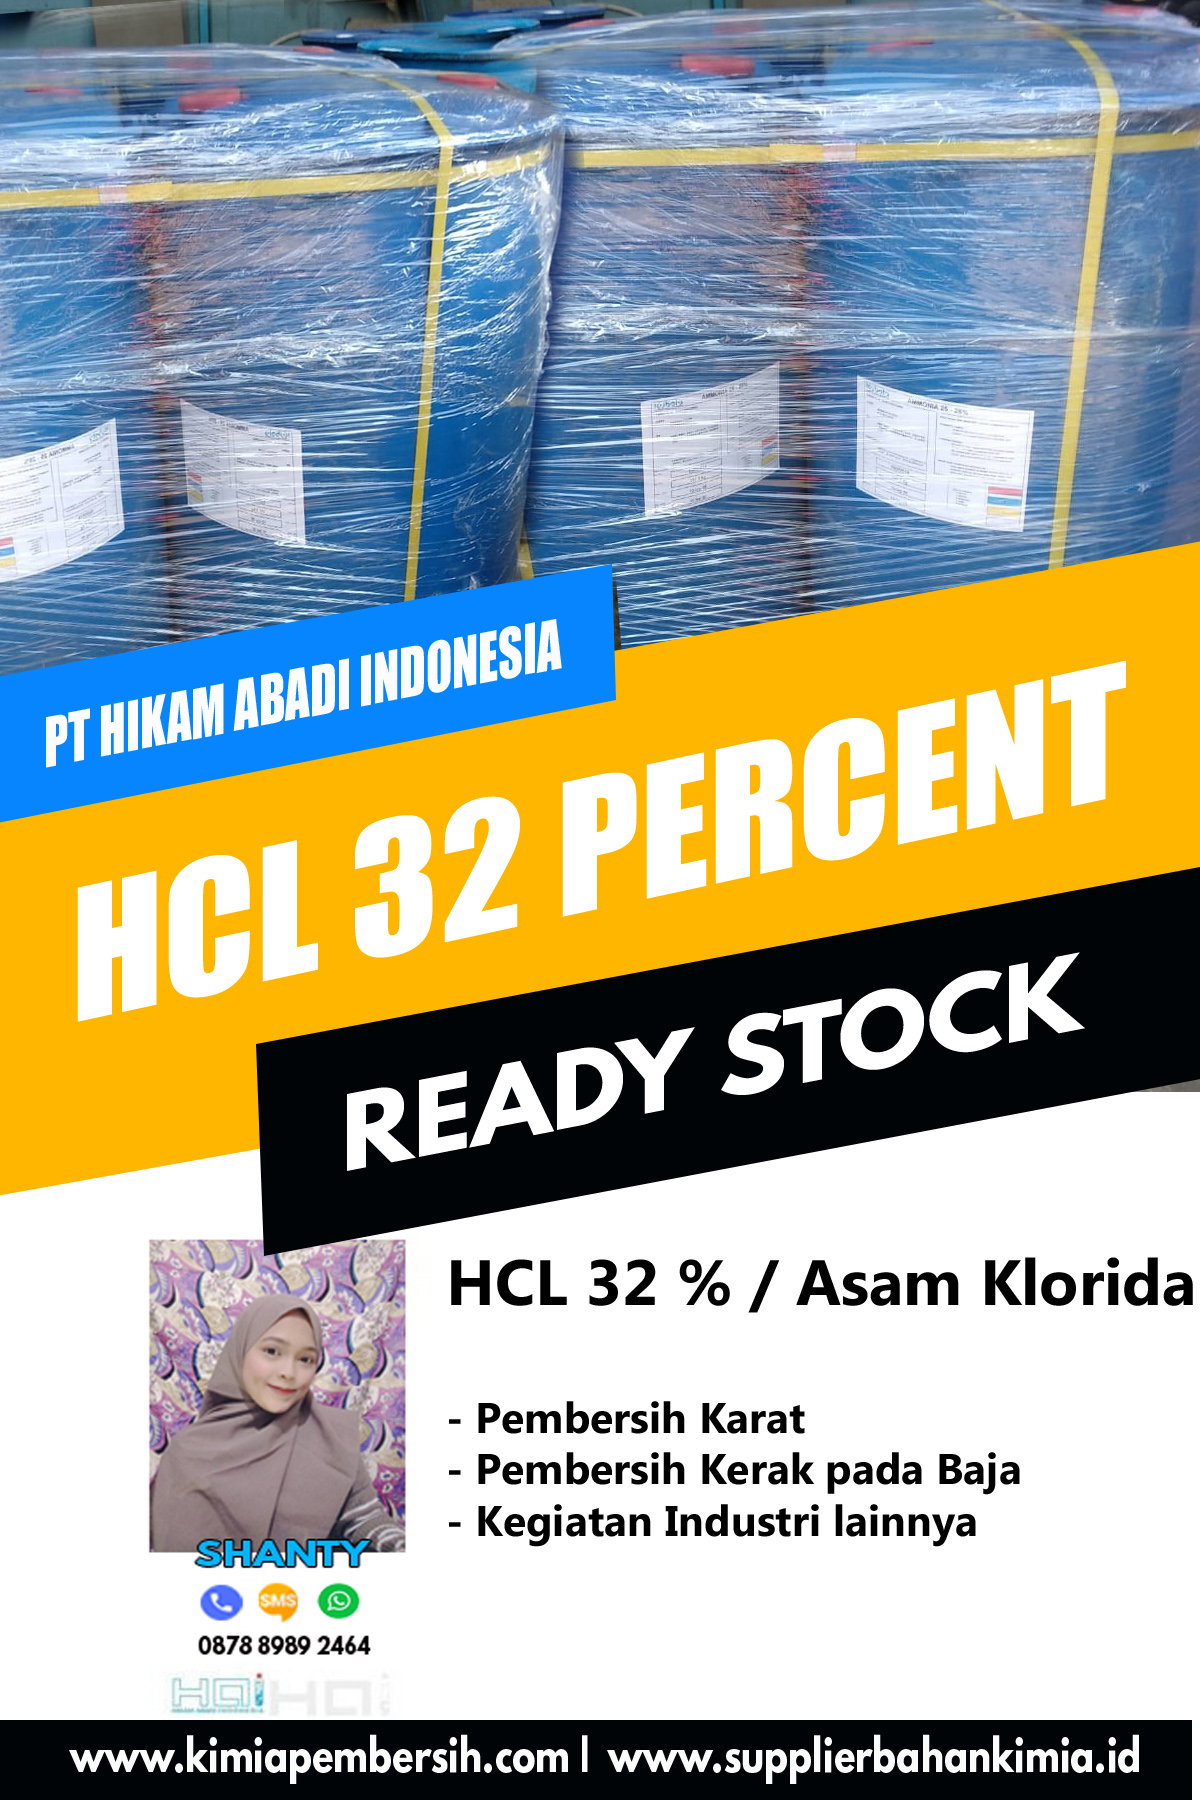 Distributor HCL 32 Percent